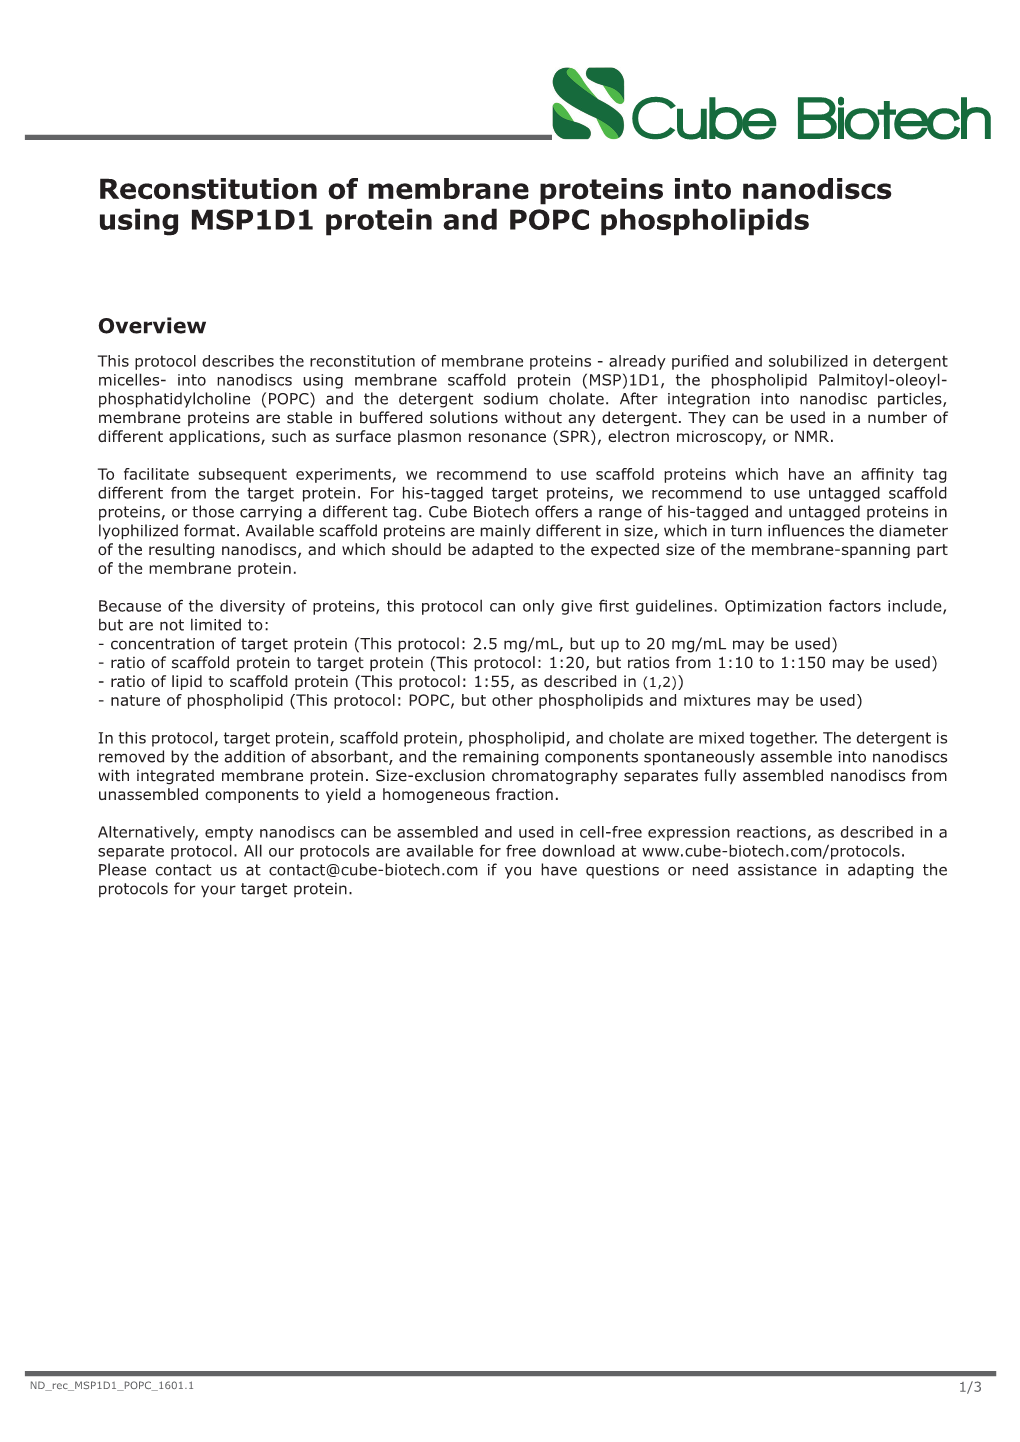 POPC Phospholipids